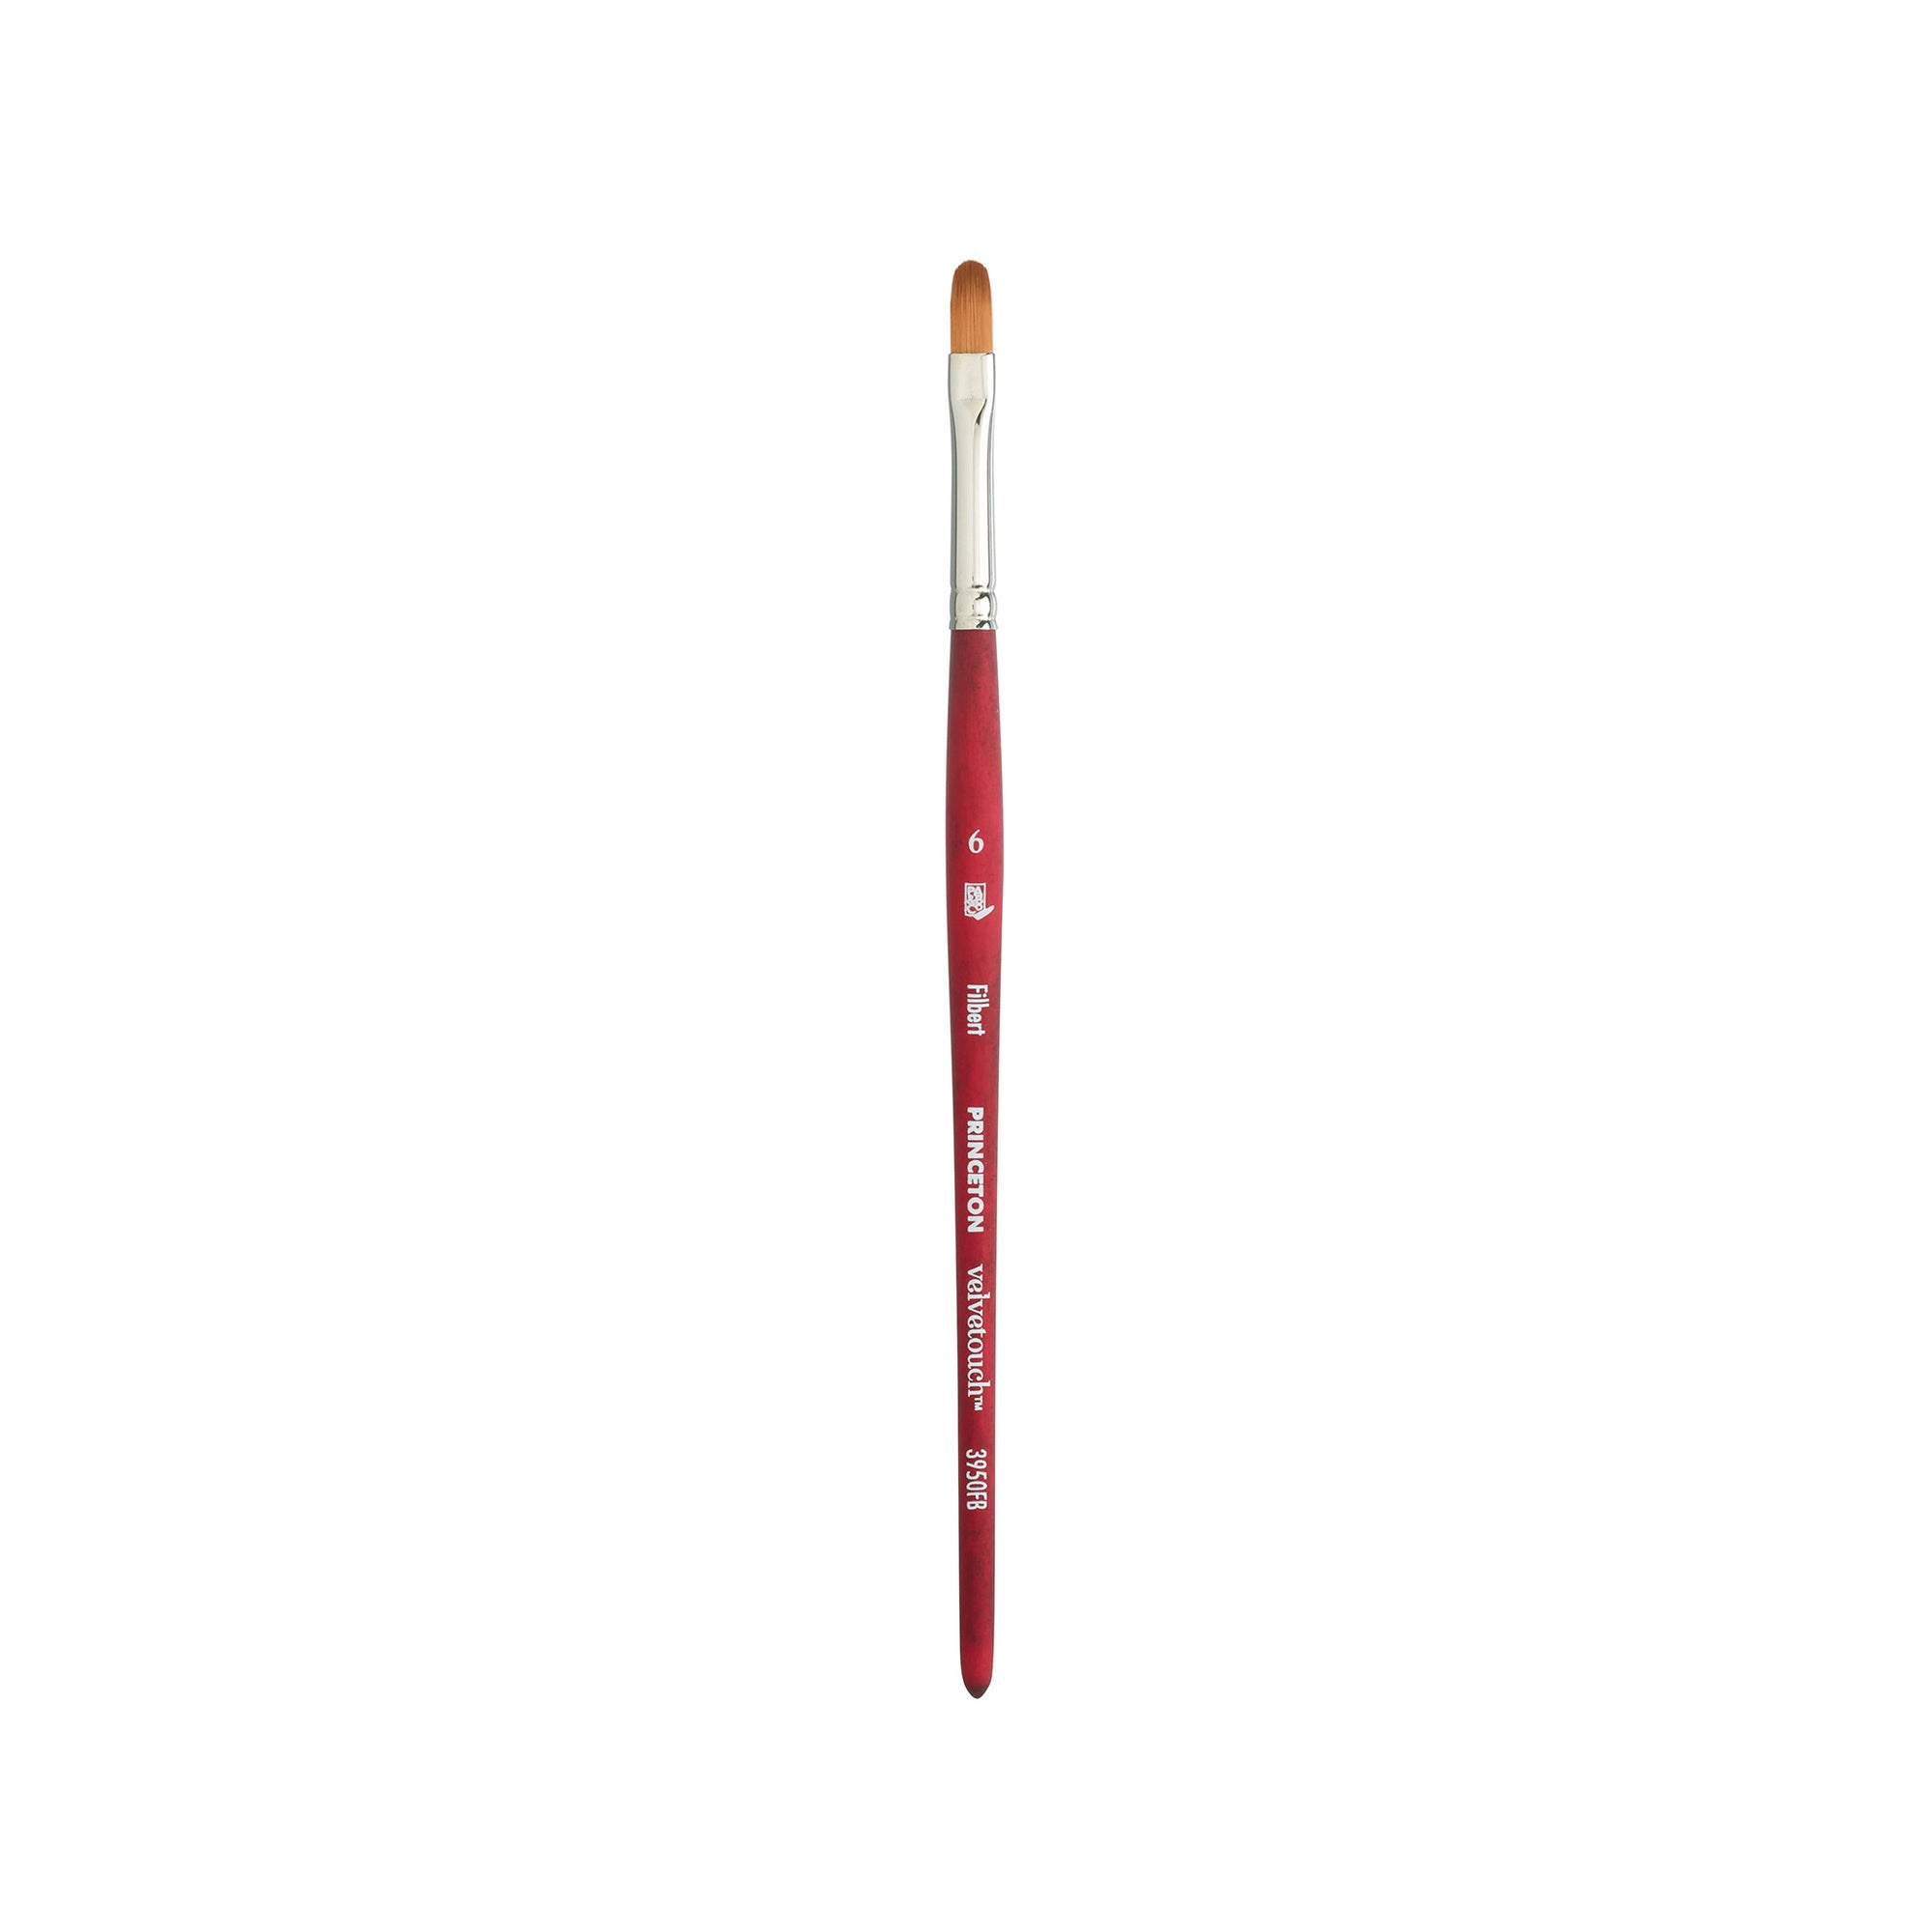 Princeton™ Velvetouch™ Series 3950 Oval Mop Brush